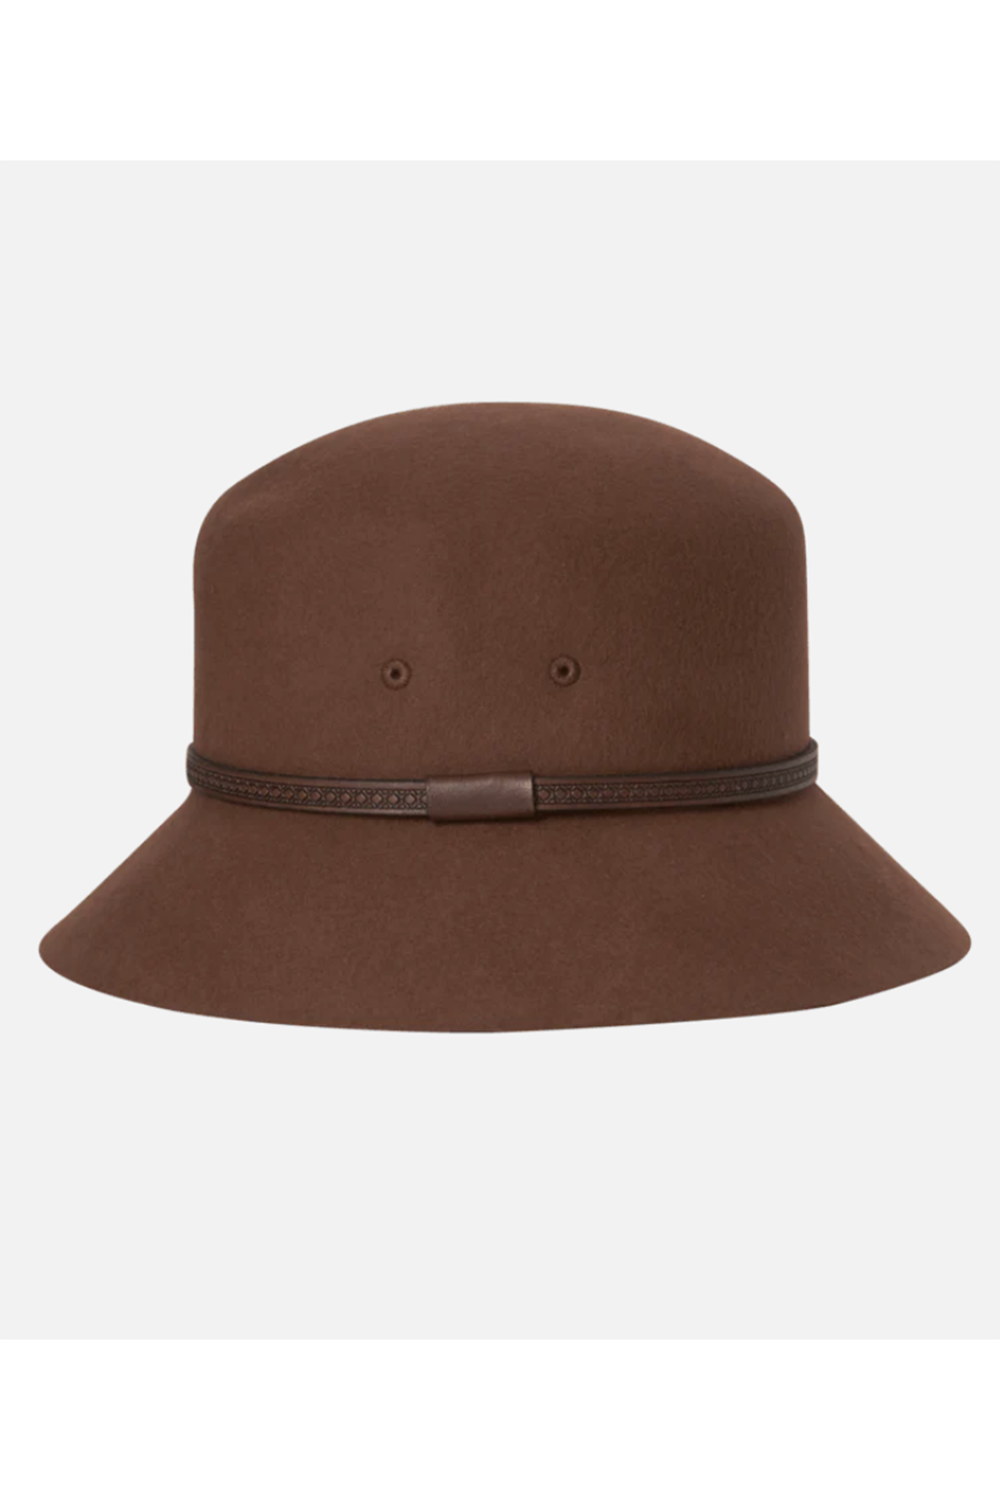 SIDEWALK SALE ITEM - Ladies Mid Brim Hat - Remy Chestnut